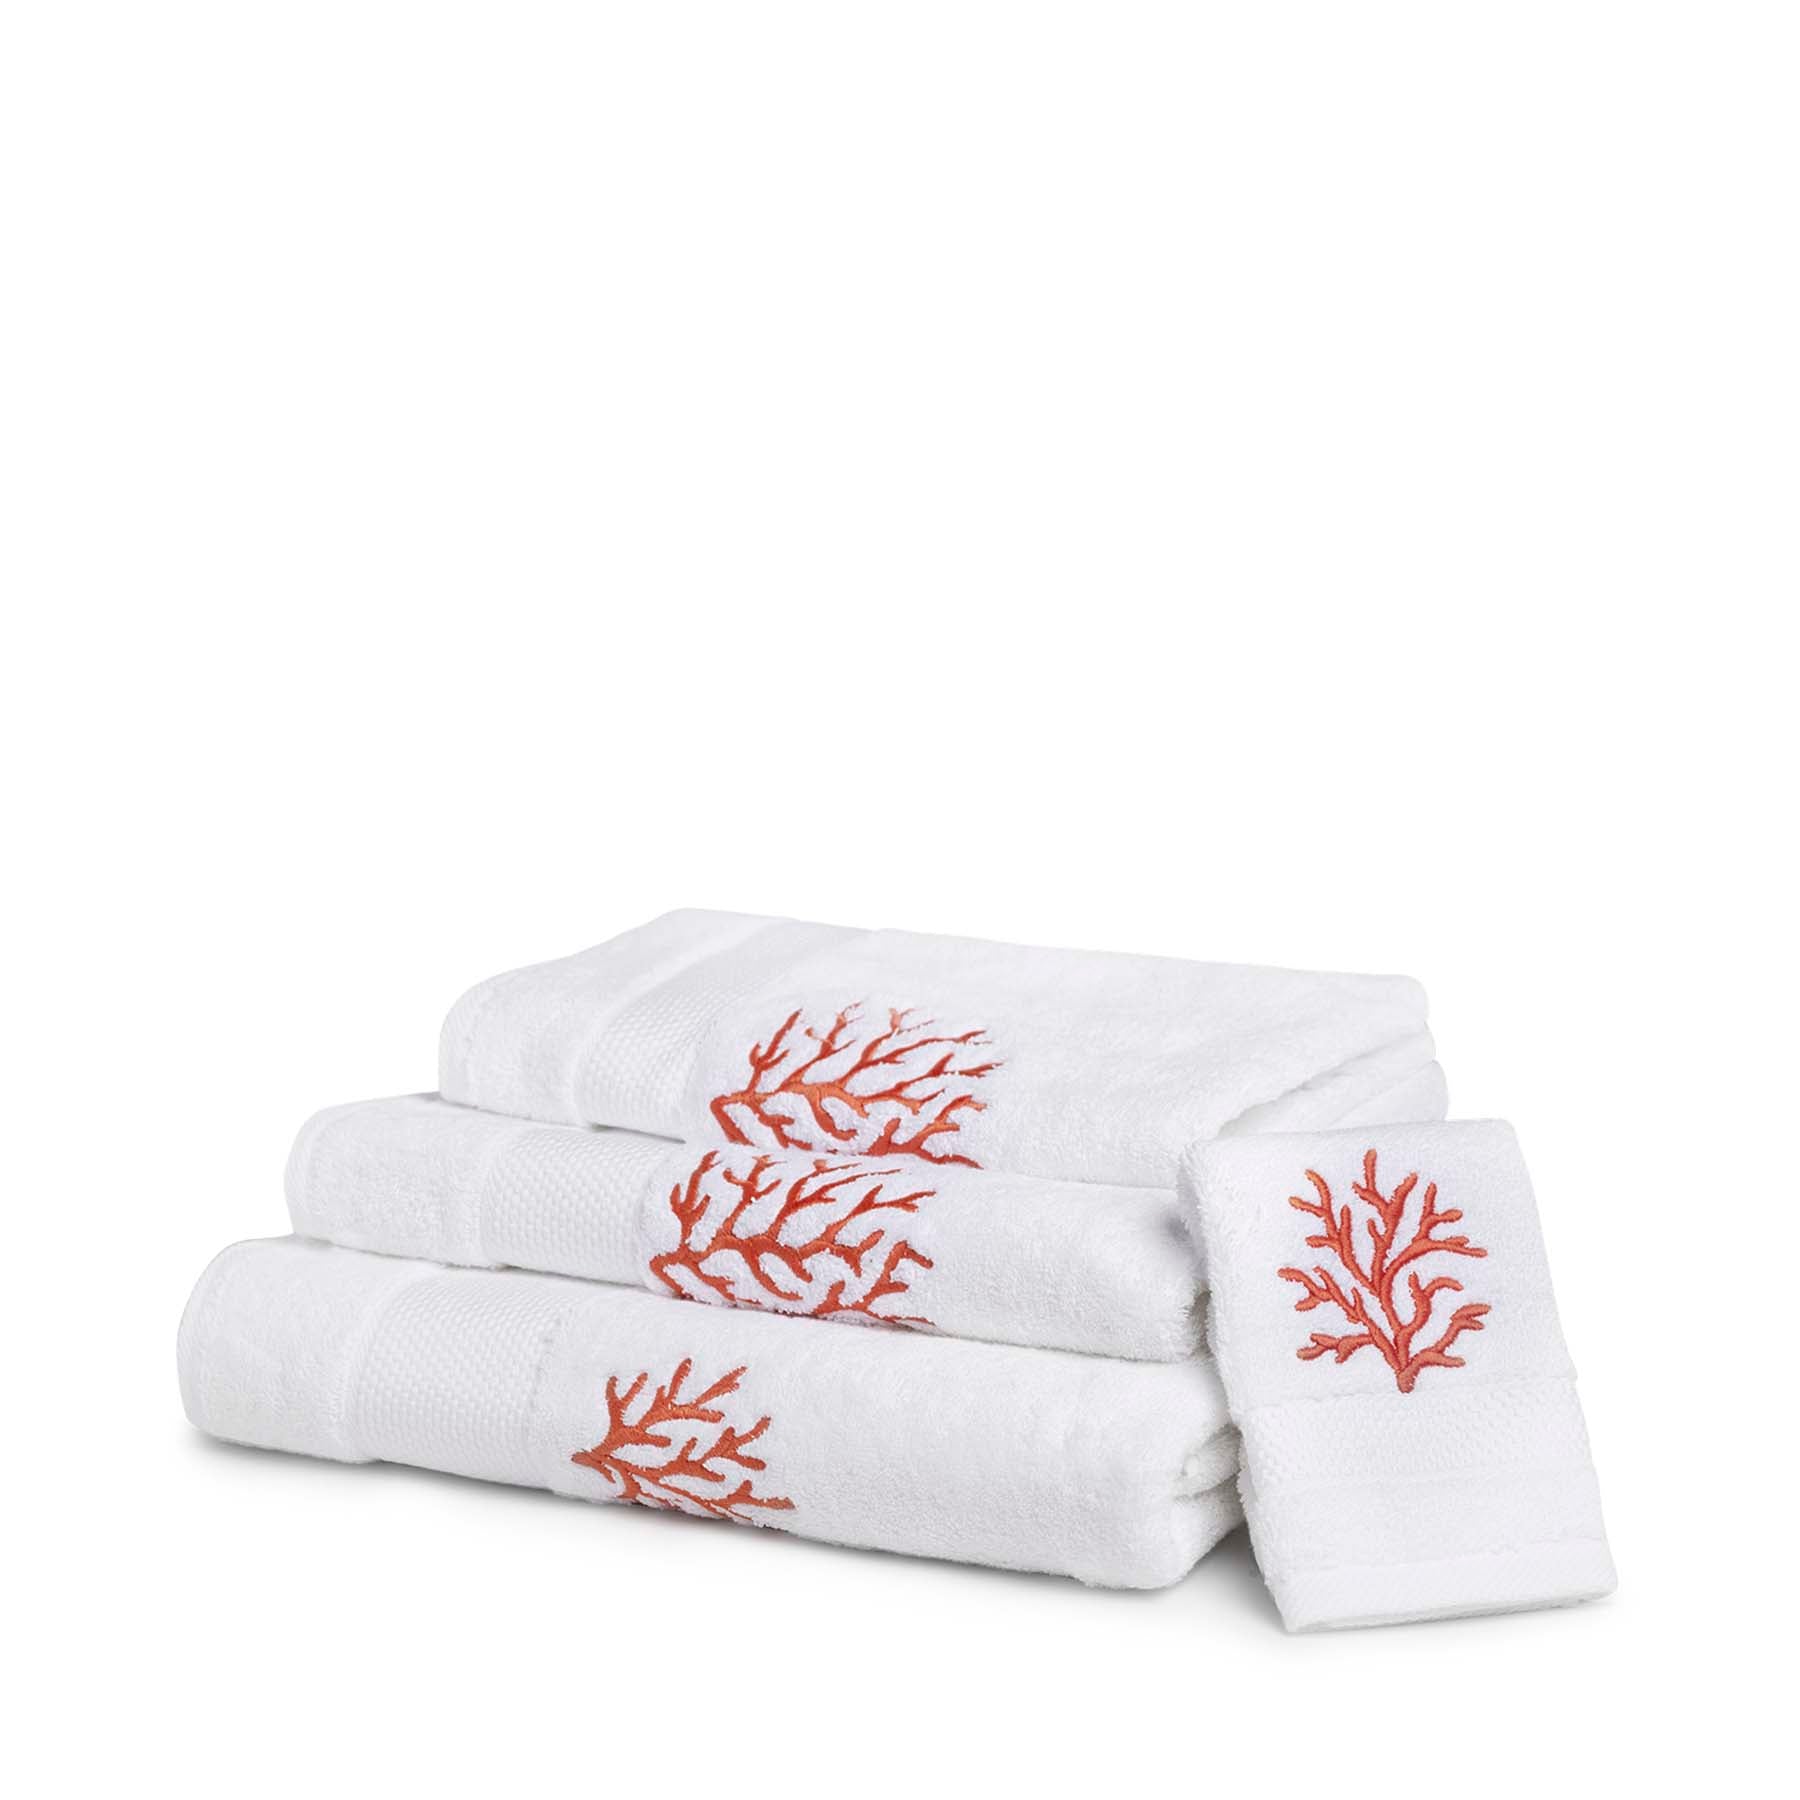 Lique Embroidered Bath Towel Set - Embroidered Bath Towels